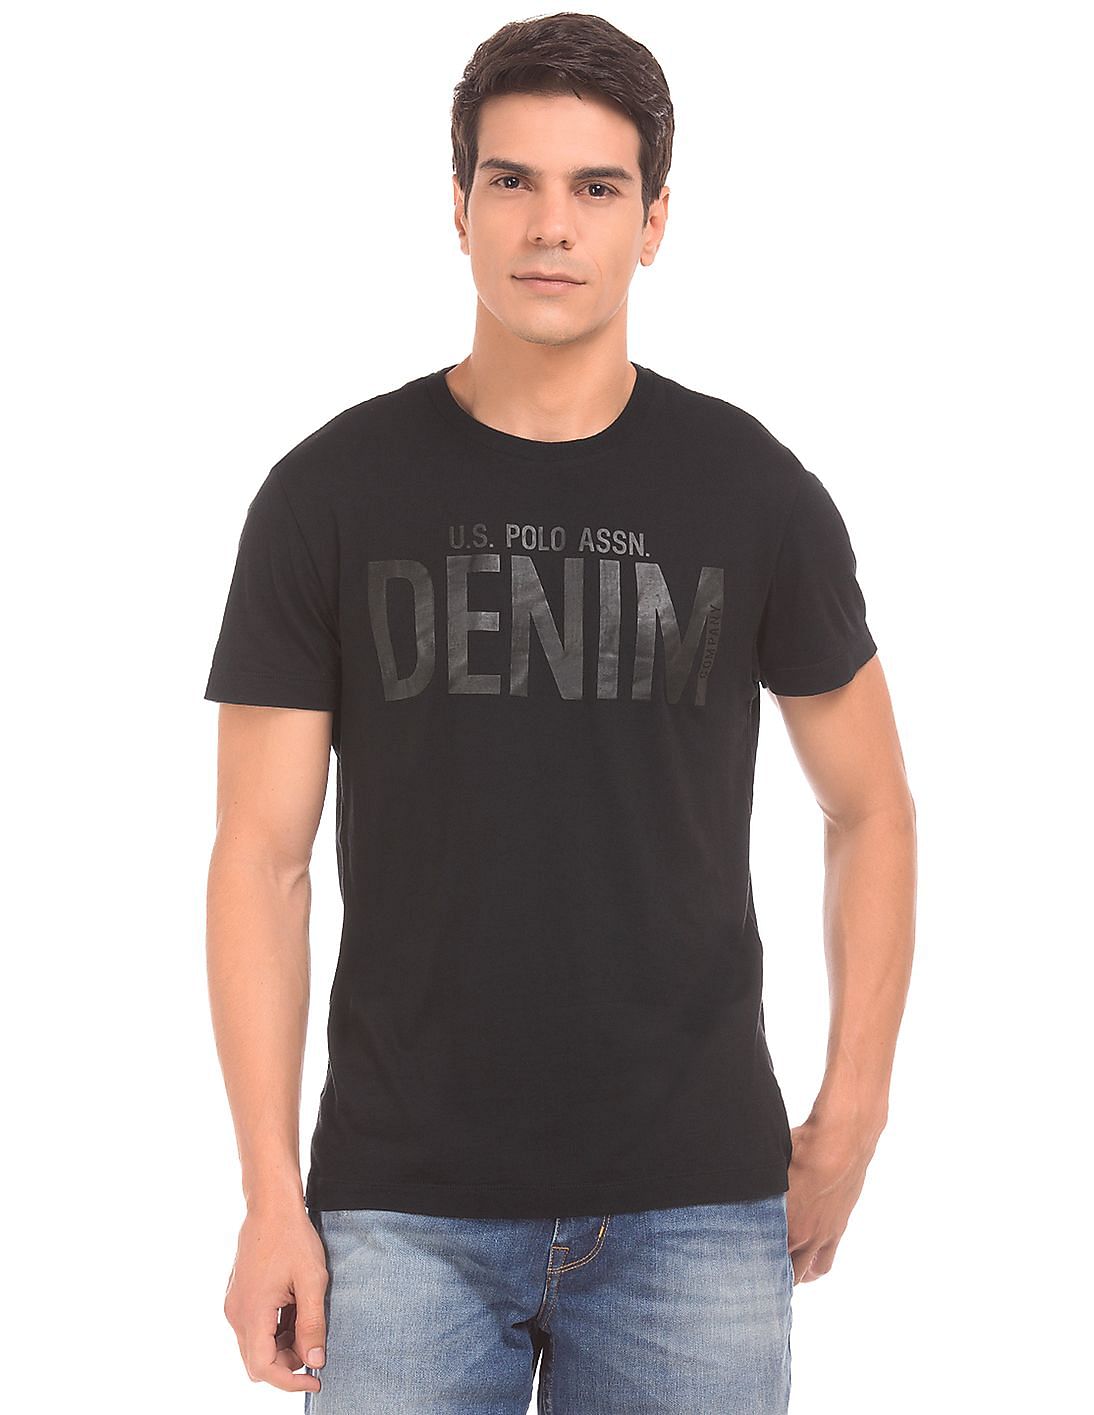 Buy U.S. Polo Assn. Denim Co. Men Brand Print Crew Neck T-Shirt - NNNOW.com